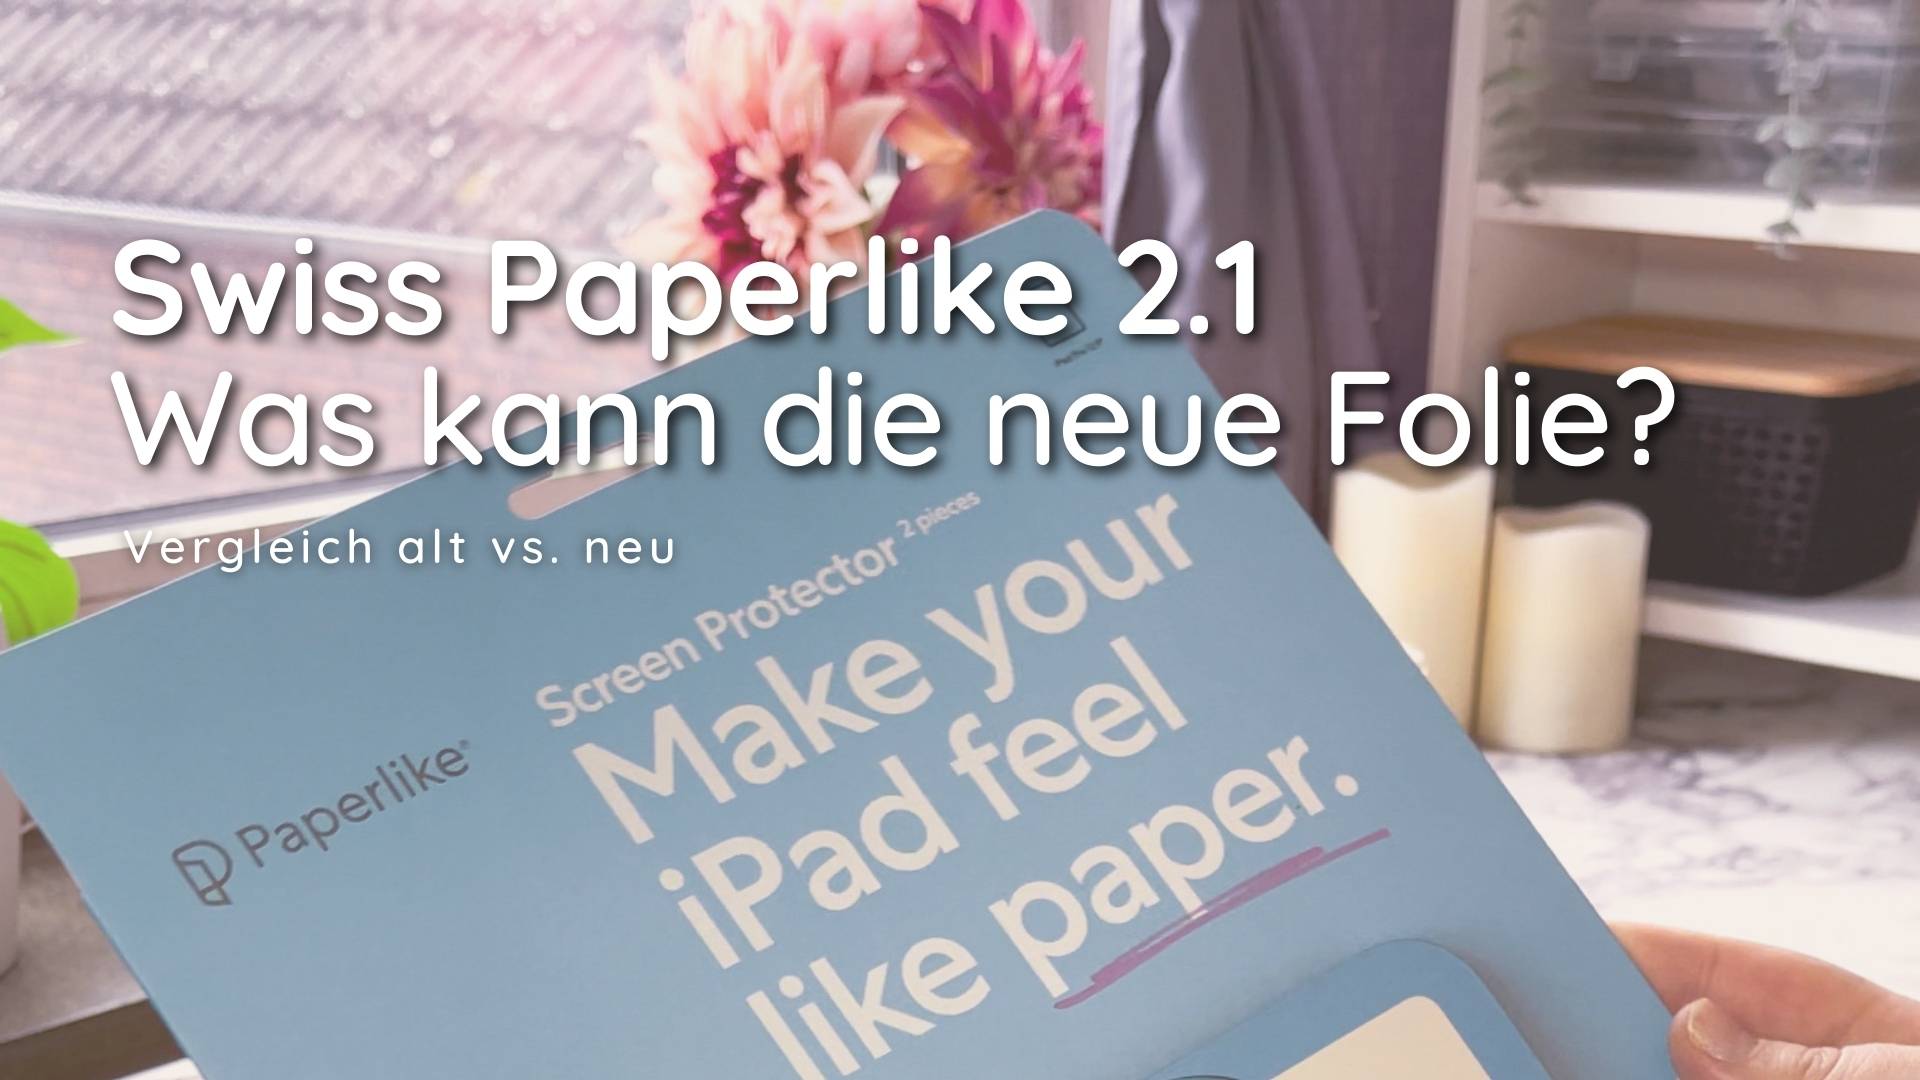 Swiss Paperlike 2.1 - Vergleich alt vs. neuer Display Folie ￼